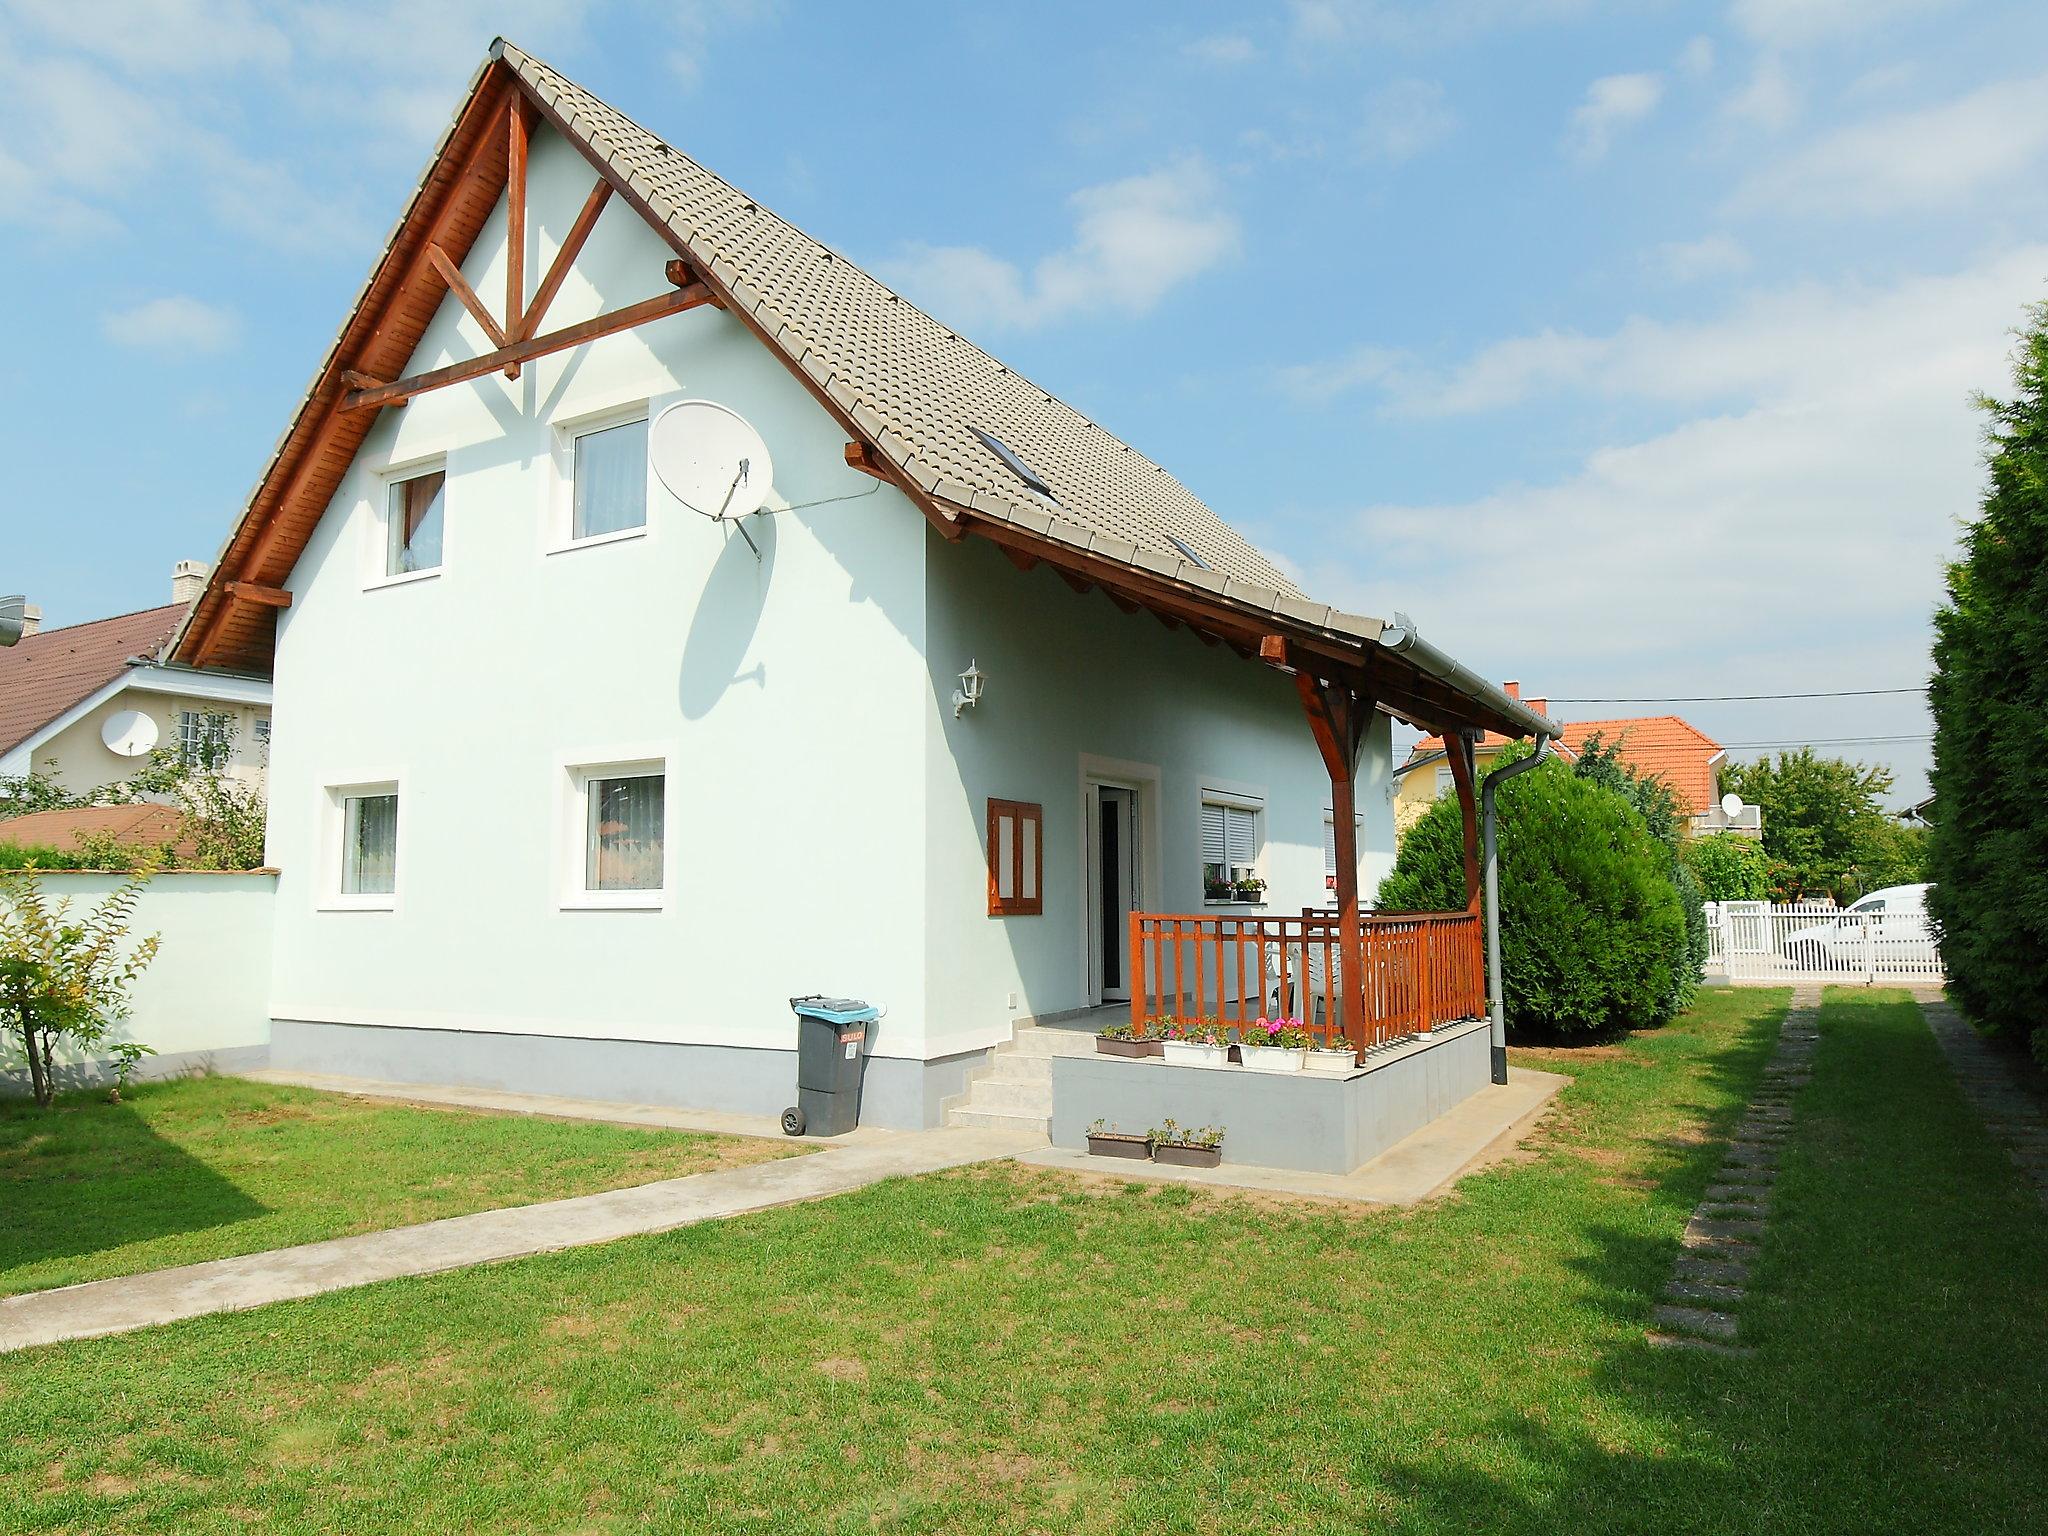 Foto 1 - Casa con 6 camere da letto a Balatonszárszó con giardino e vista mare